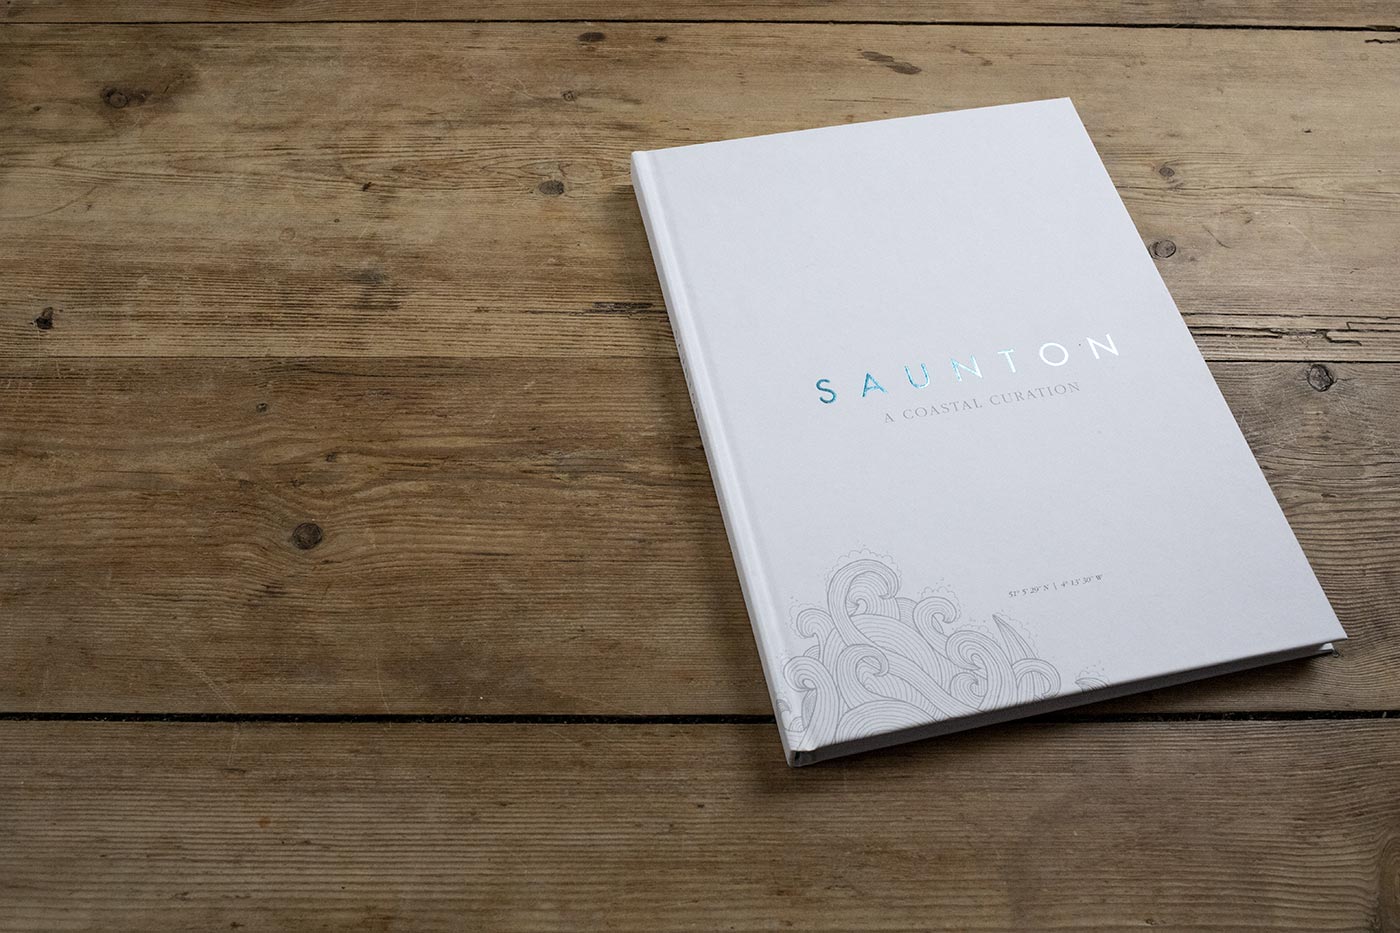 Saunton Sands Hotel book